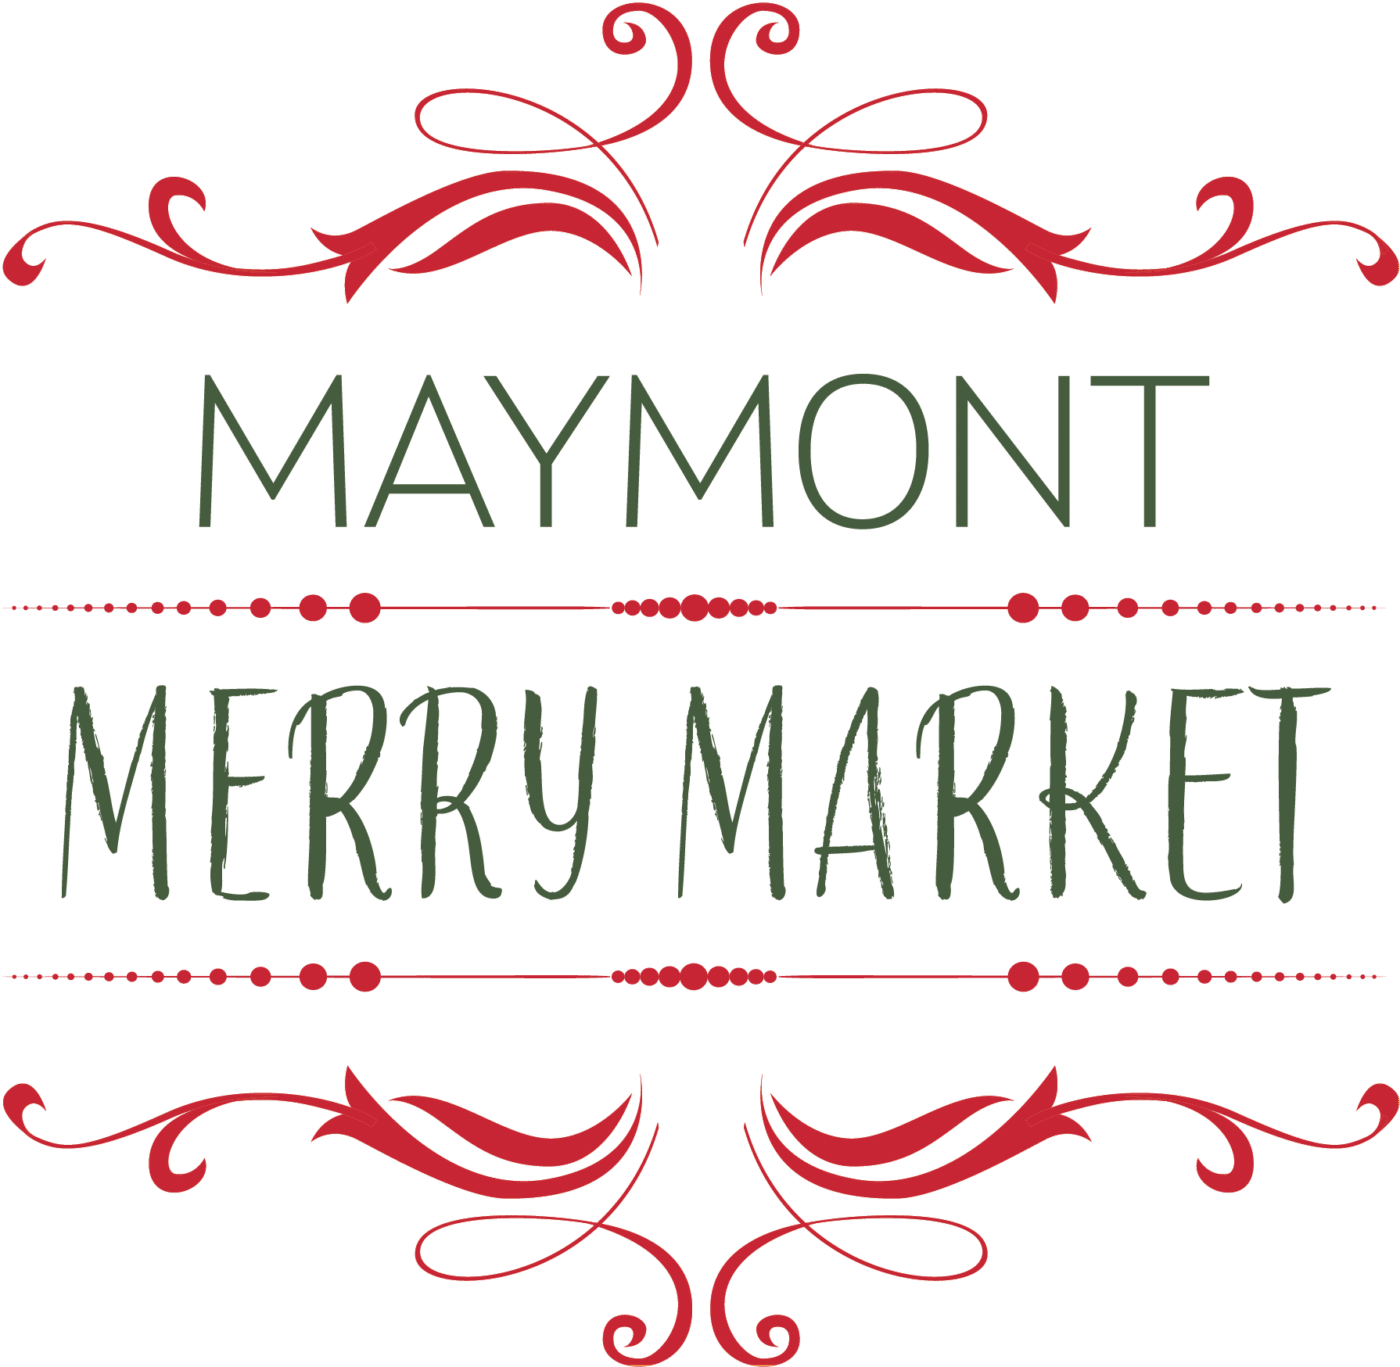 Merry Market Maymont Foundation